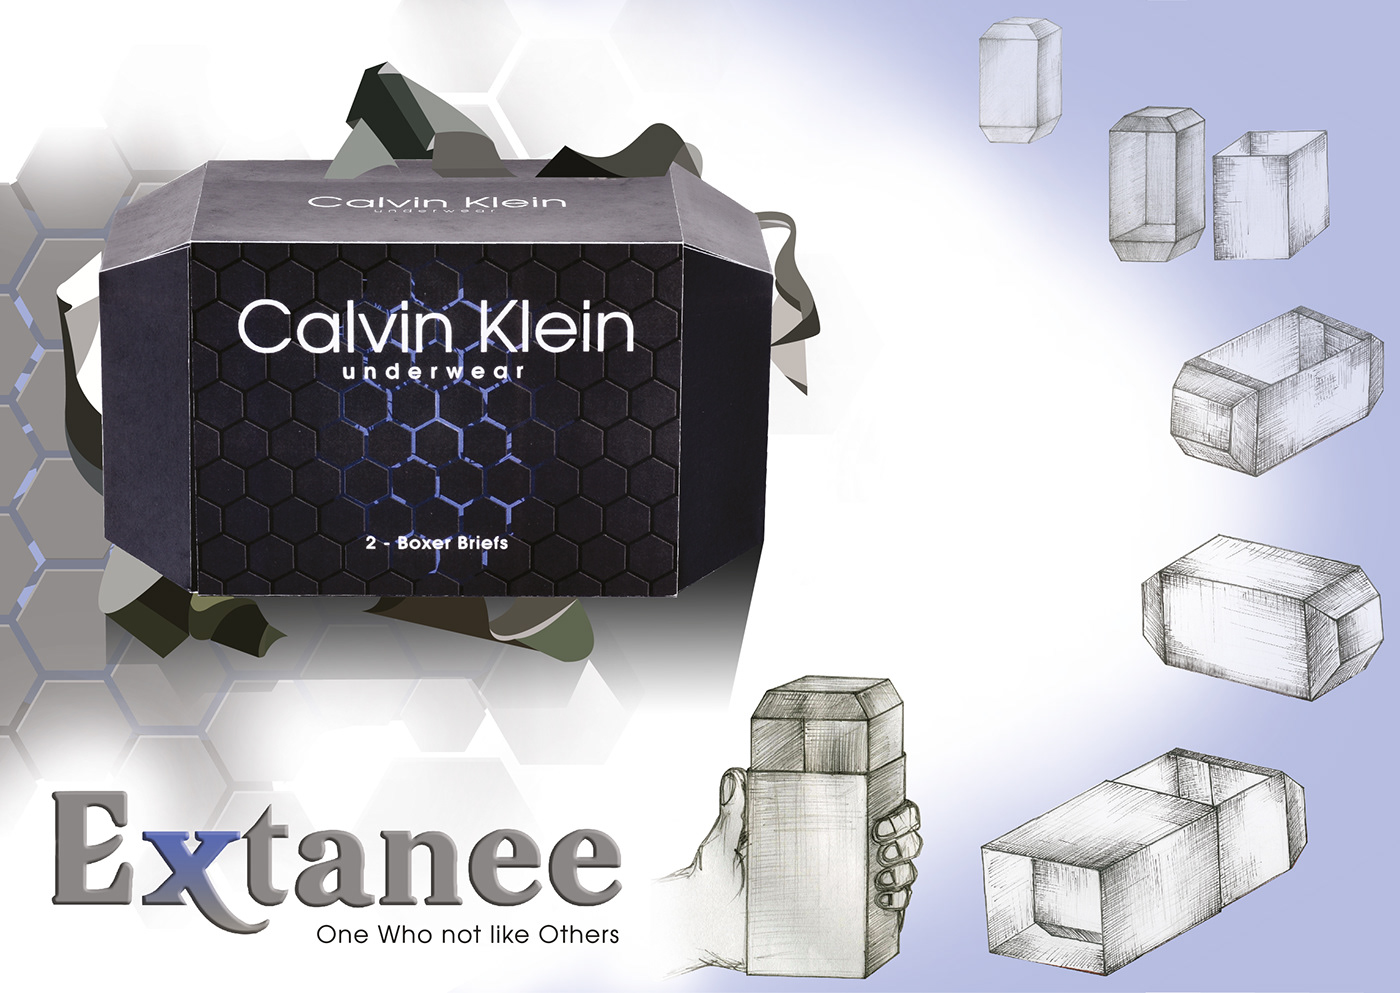 Calvin Klein DesignProcess Designproject extraordinary Packaging packaging design underware